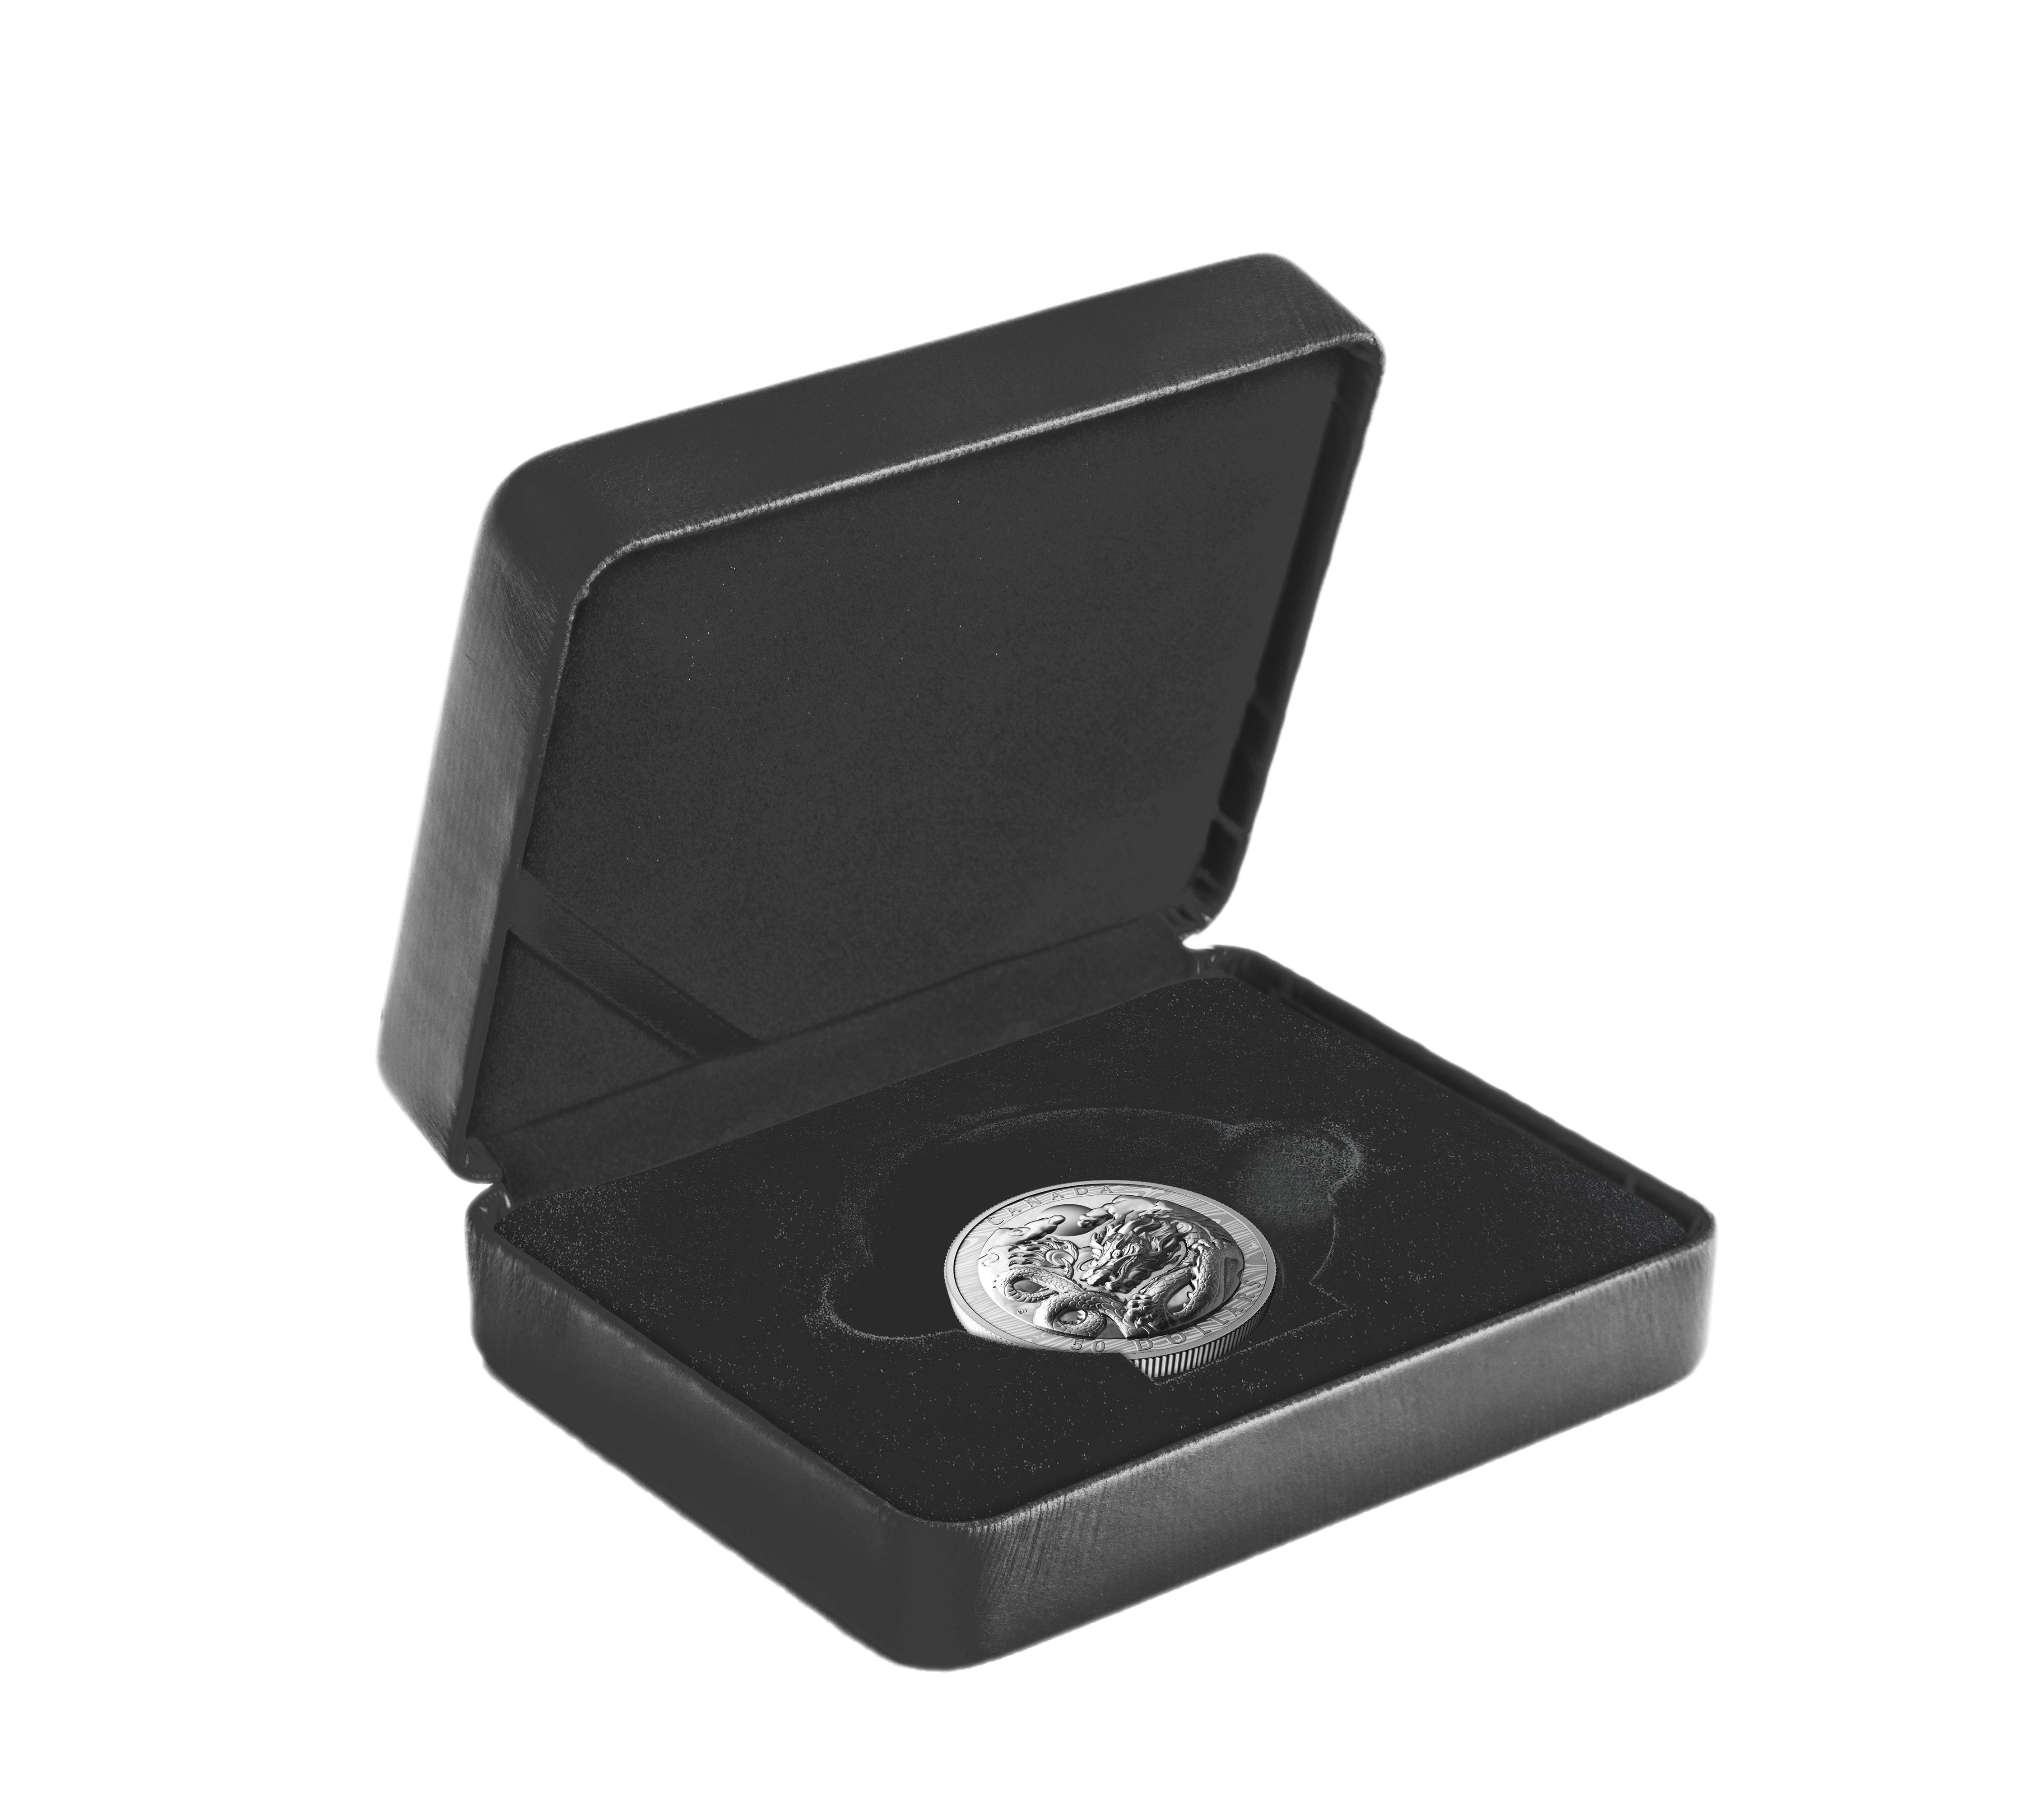 DRAGON Lunar Year Silver Coin $50 Canada 2024